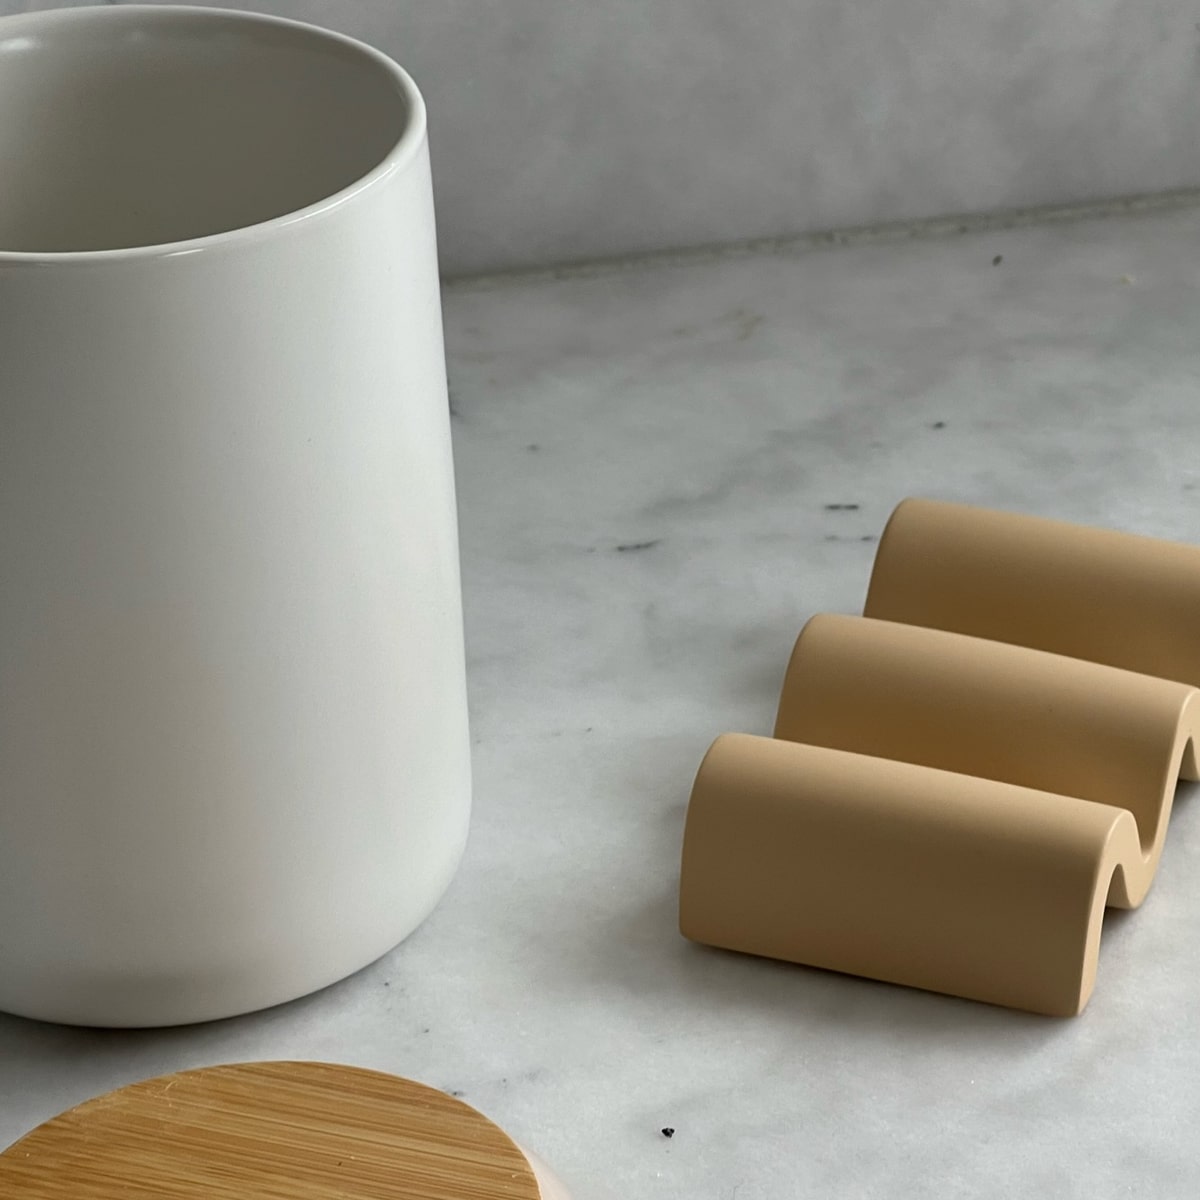 Ventoux Ceramic Jar - Buy Tools Online at FRANKY'S